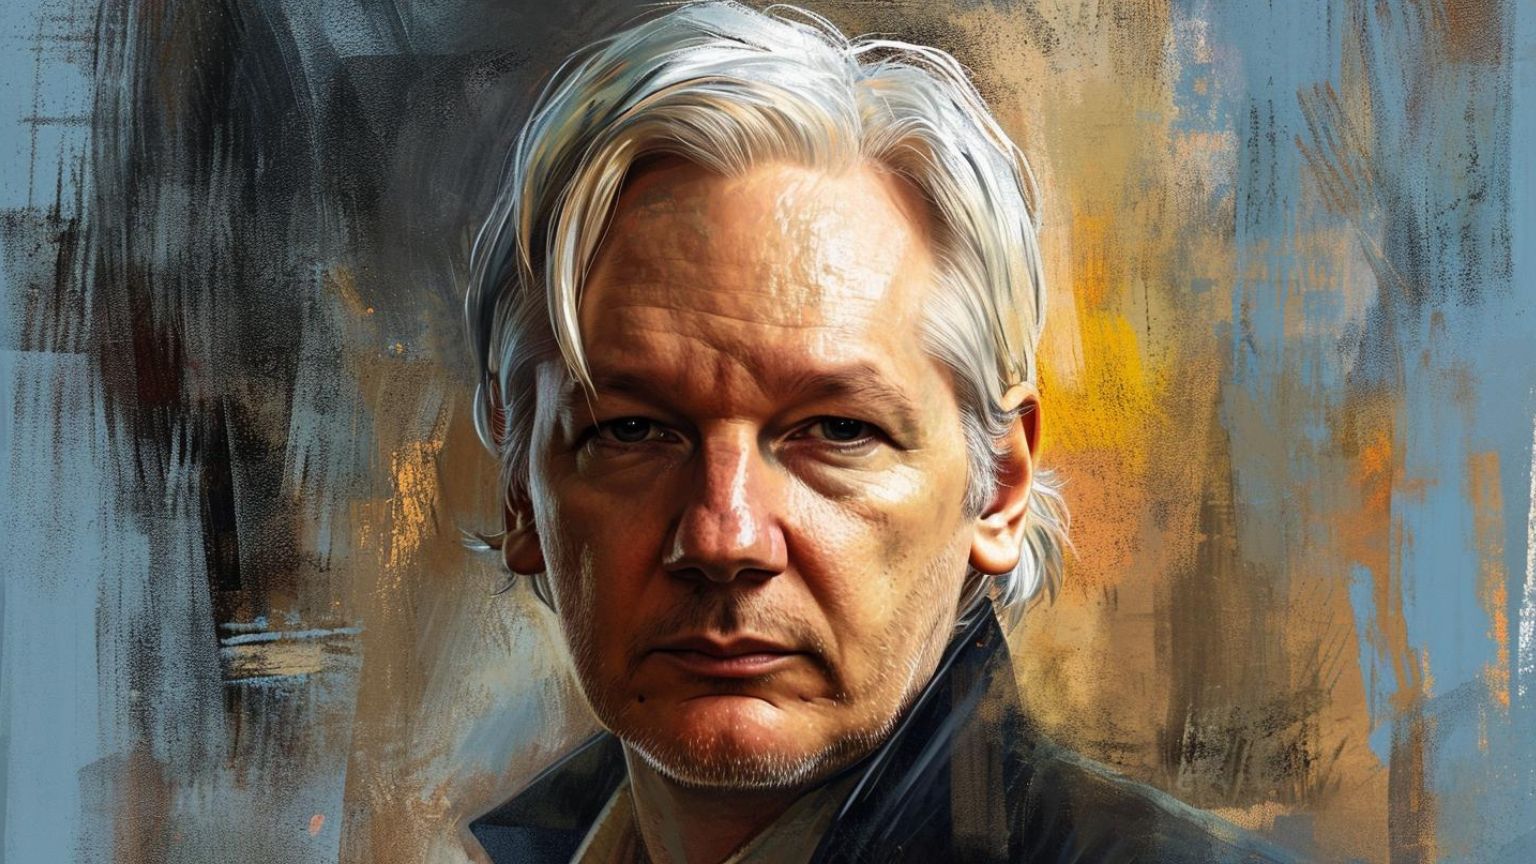 Visitors of Assange Allowed to Continue Lawsuit Against CIA Surveillance, Judge Rules